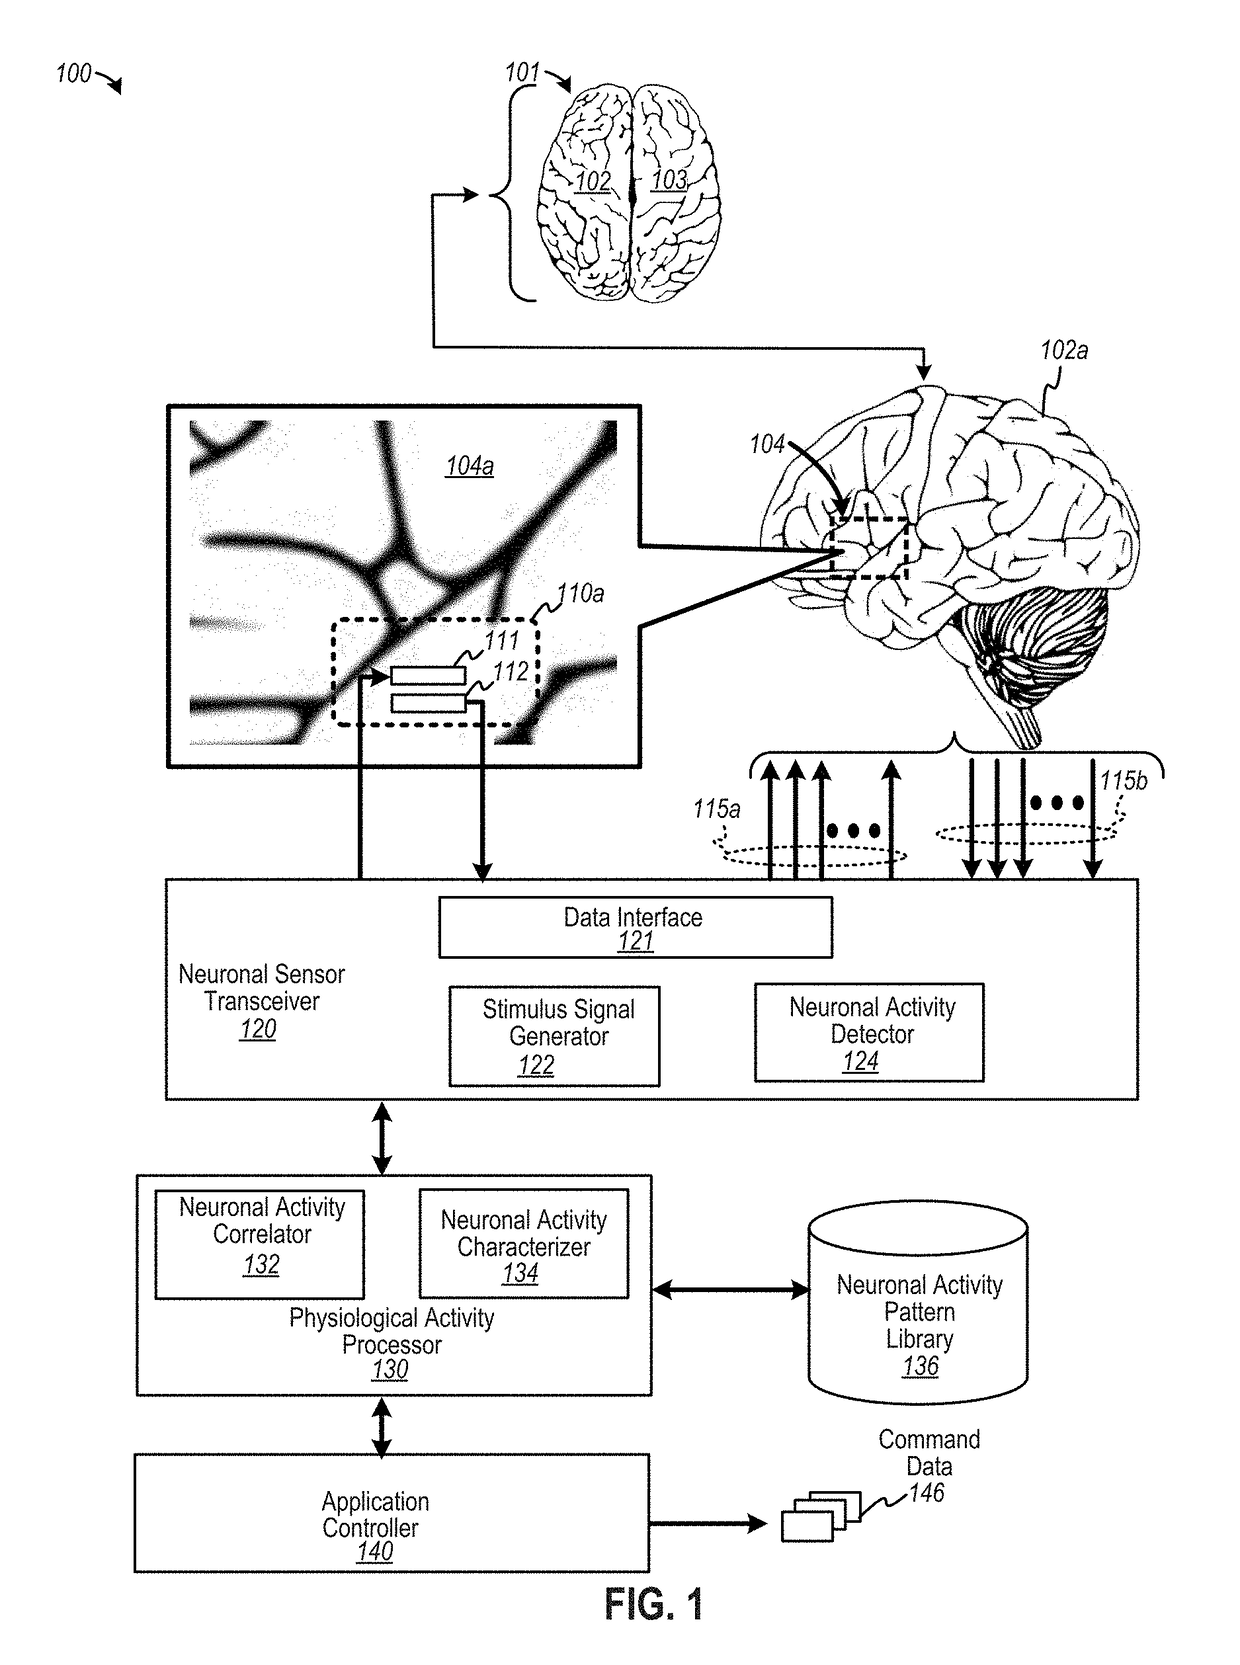 Sensors to determine neuronal activity of an organism to facilitate a human-machine interface